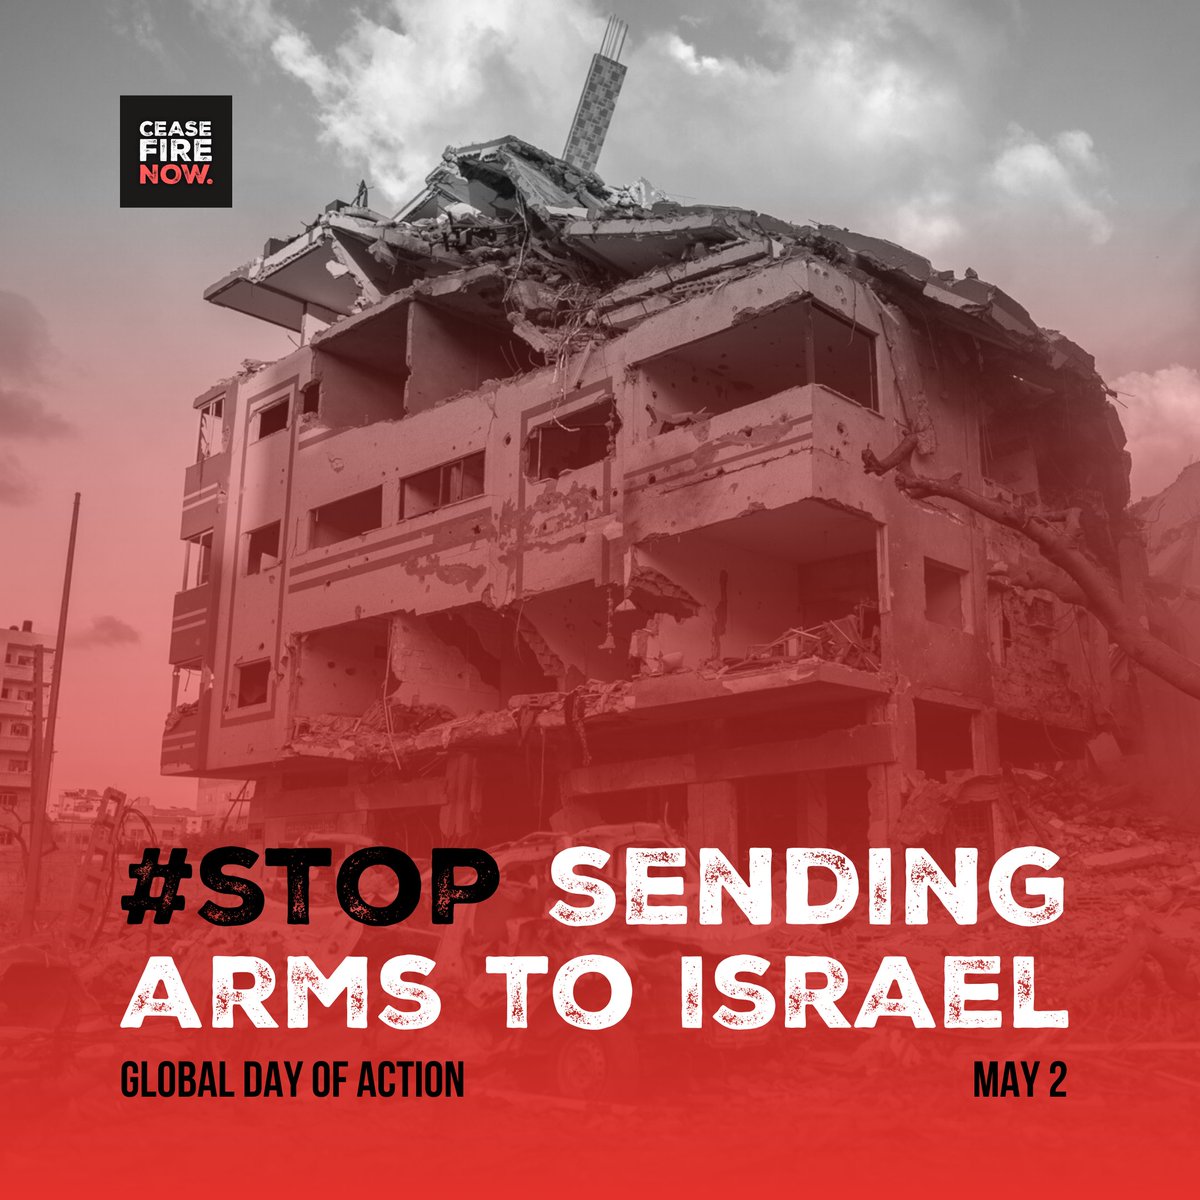 TODAY is the Global Day of Action to #StopSendingArms. 

#CeasefireNOW 
#AllOnYouBiden 
#BidensLegacy